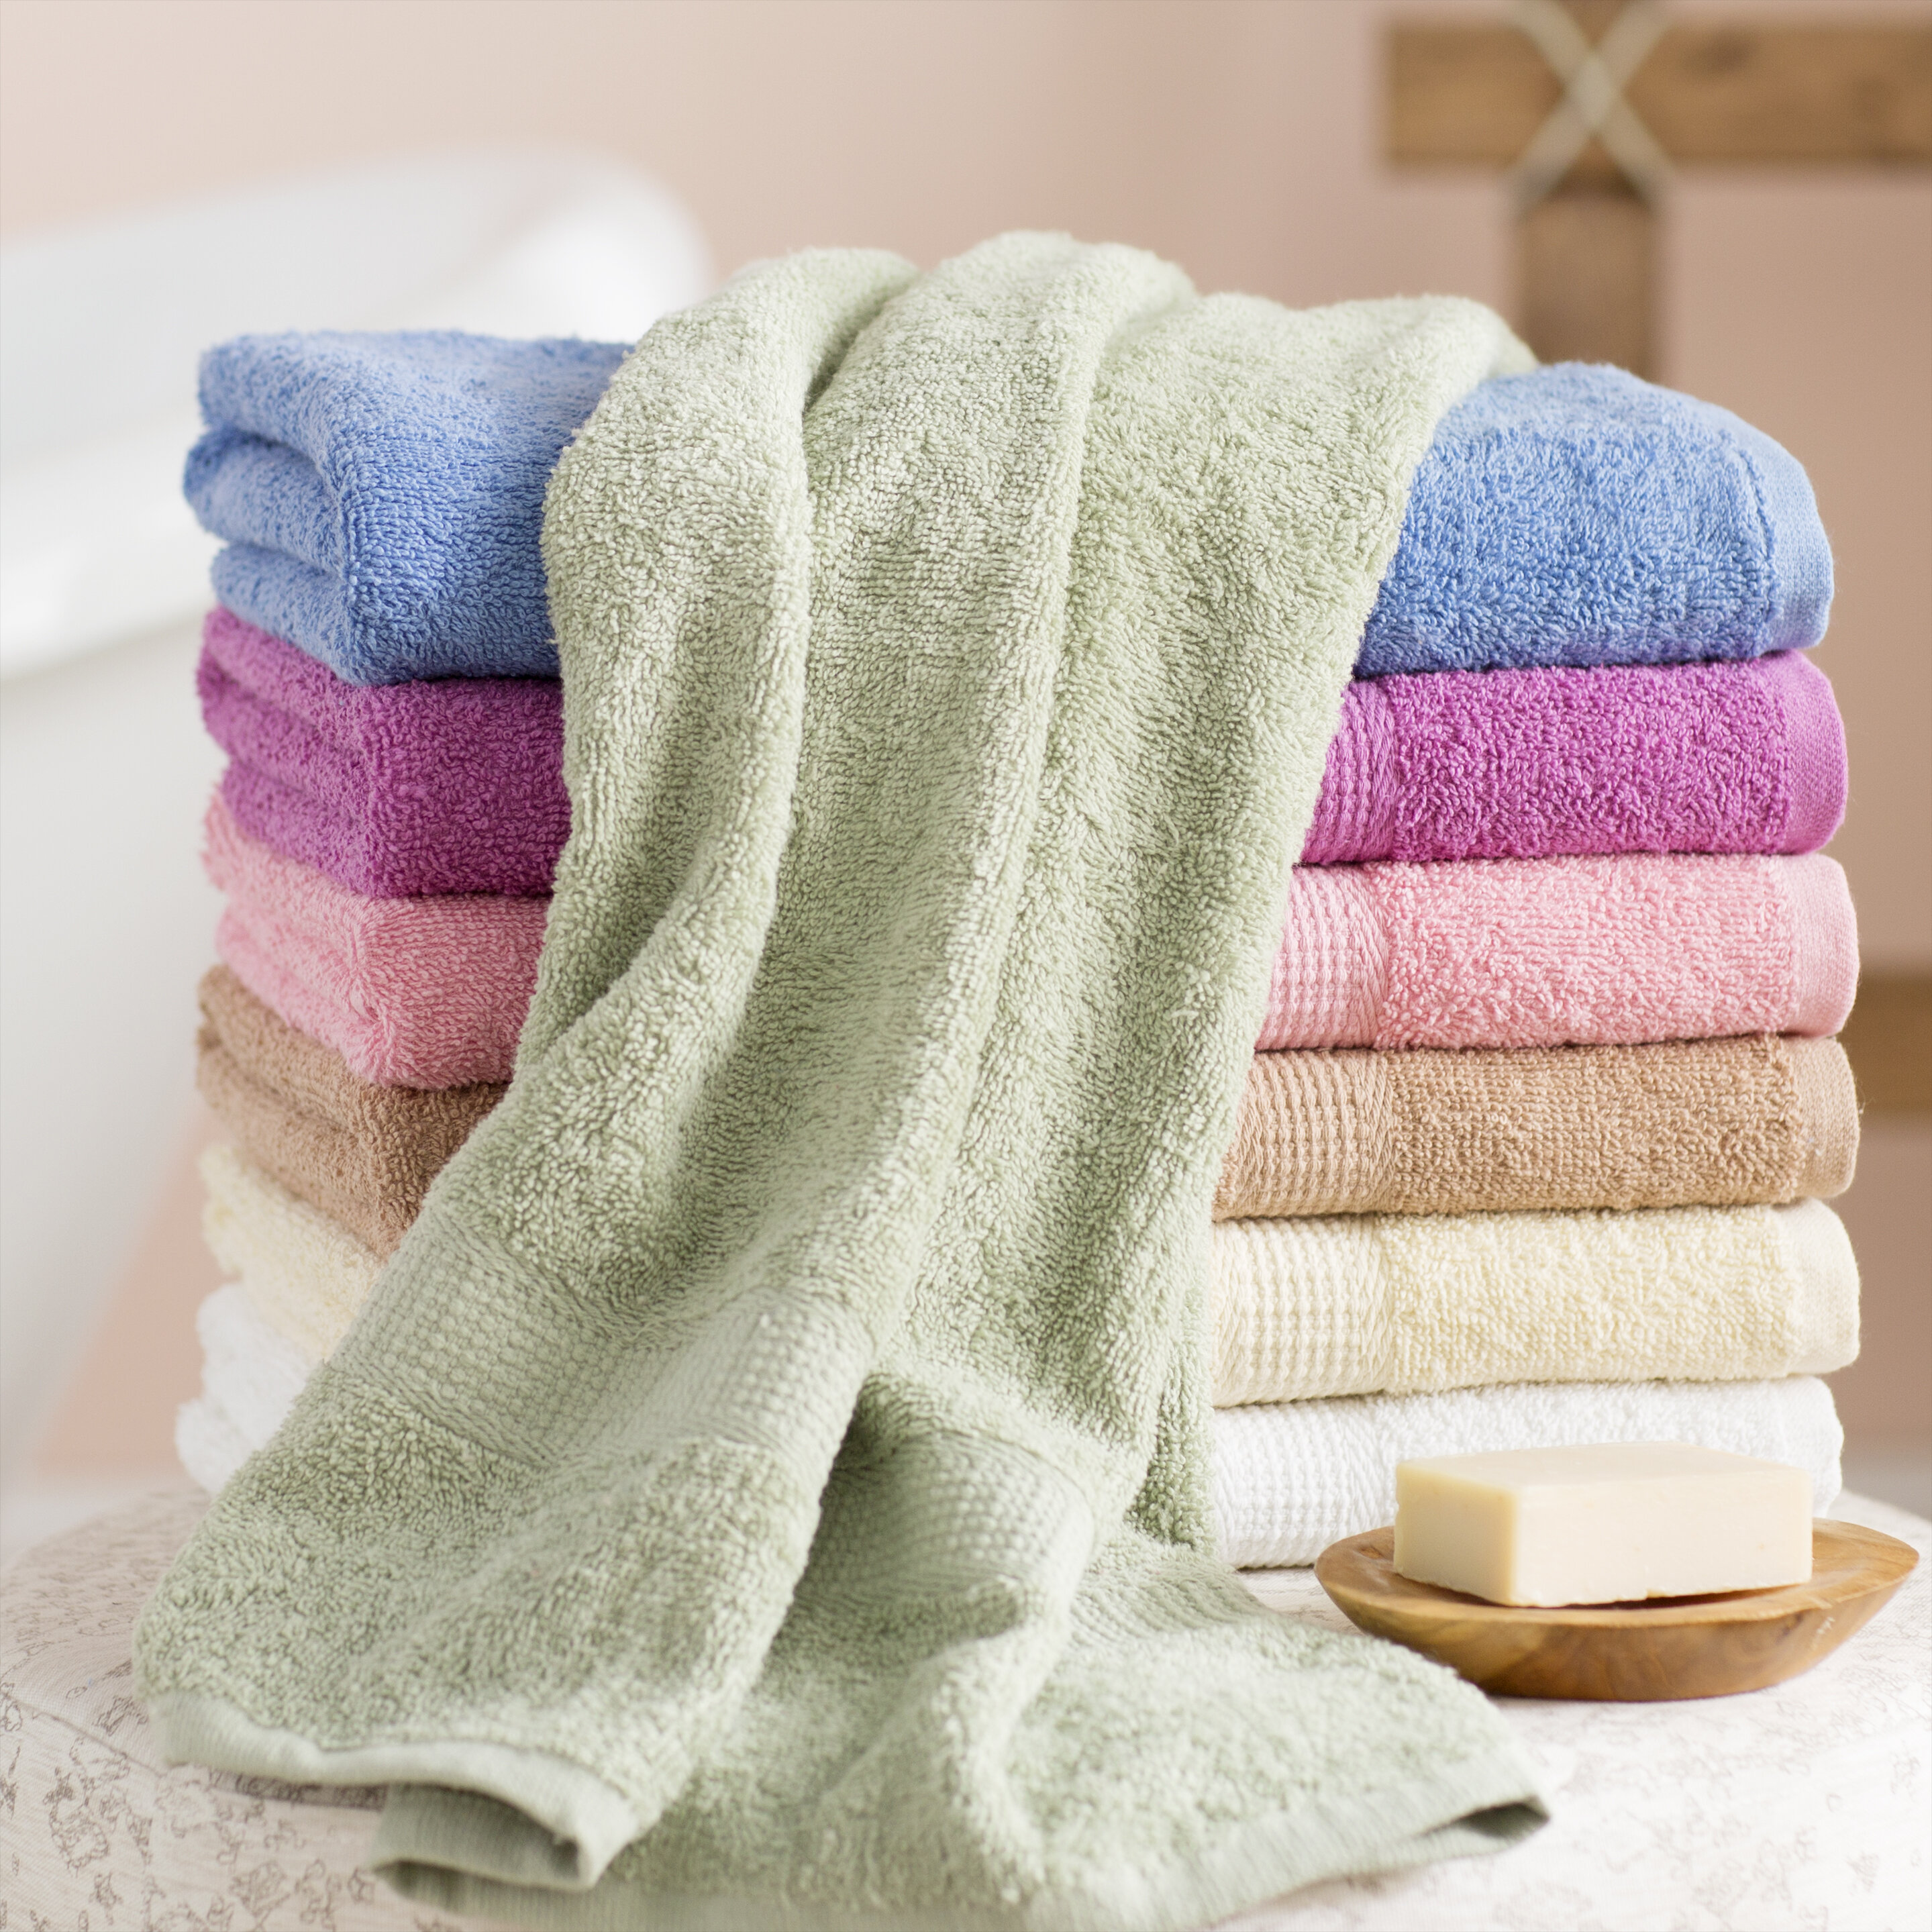 10 Pa Combed Cotton Bathroom Towels Set Details about   Bedsure Bath Towels Sets for Bathroom 